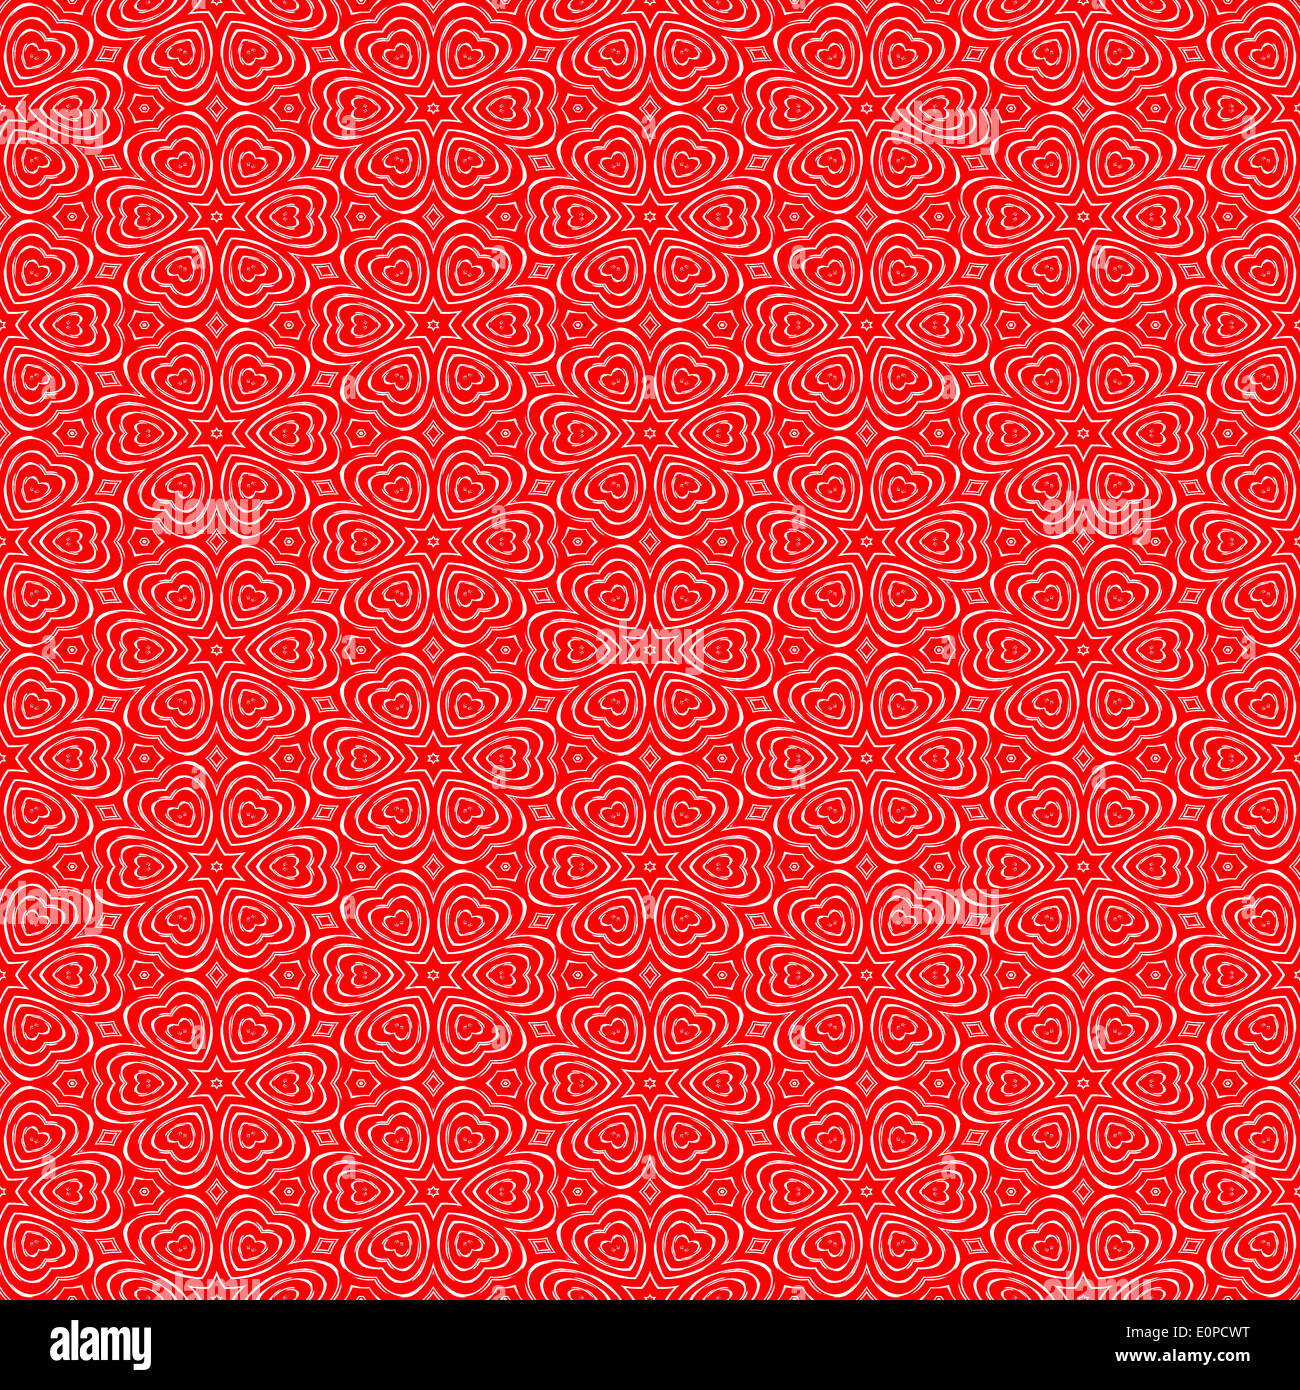 Seamless heartshape pattern - love background Stock Photo